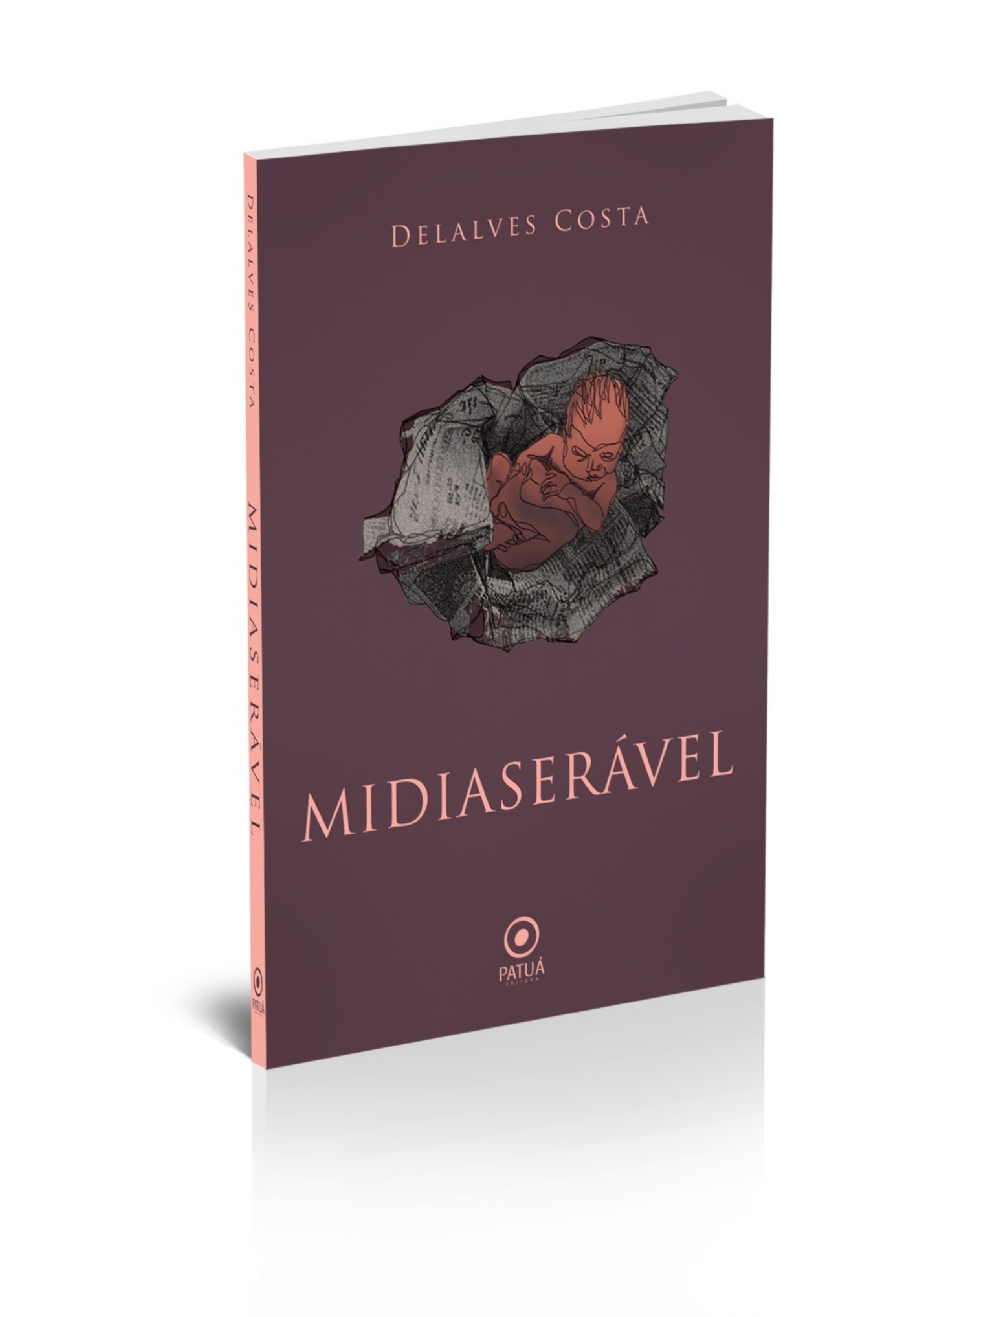 1 CAPA Midiaserável 2020 Editora Patuá - cinco poemas de Delalves Costa, do livro Midiaserável (Patuá, 2020)